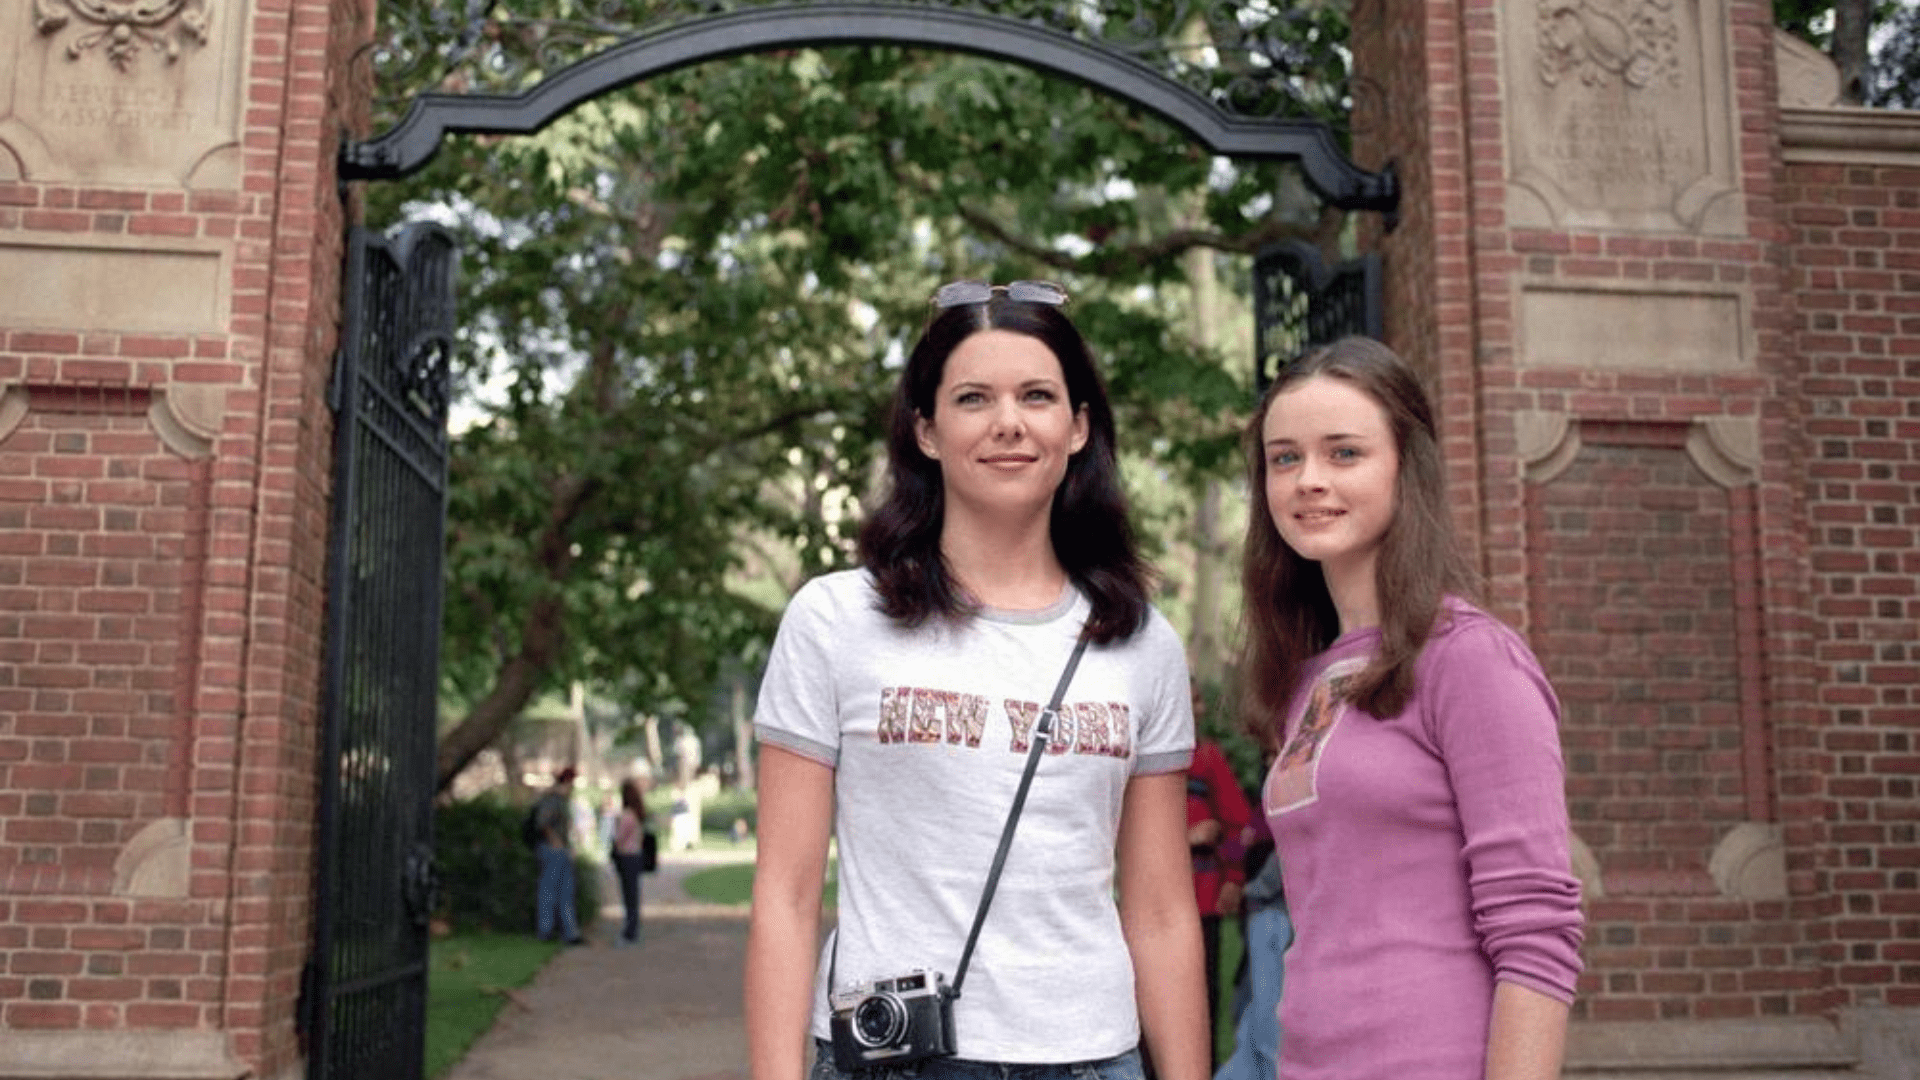 Books Mentioned In Season 2 Of Gilmore Girls | Rory Gilmore Reading Challenge - Books In Gilmore Girls Season 2